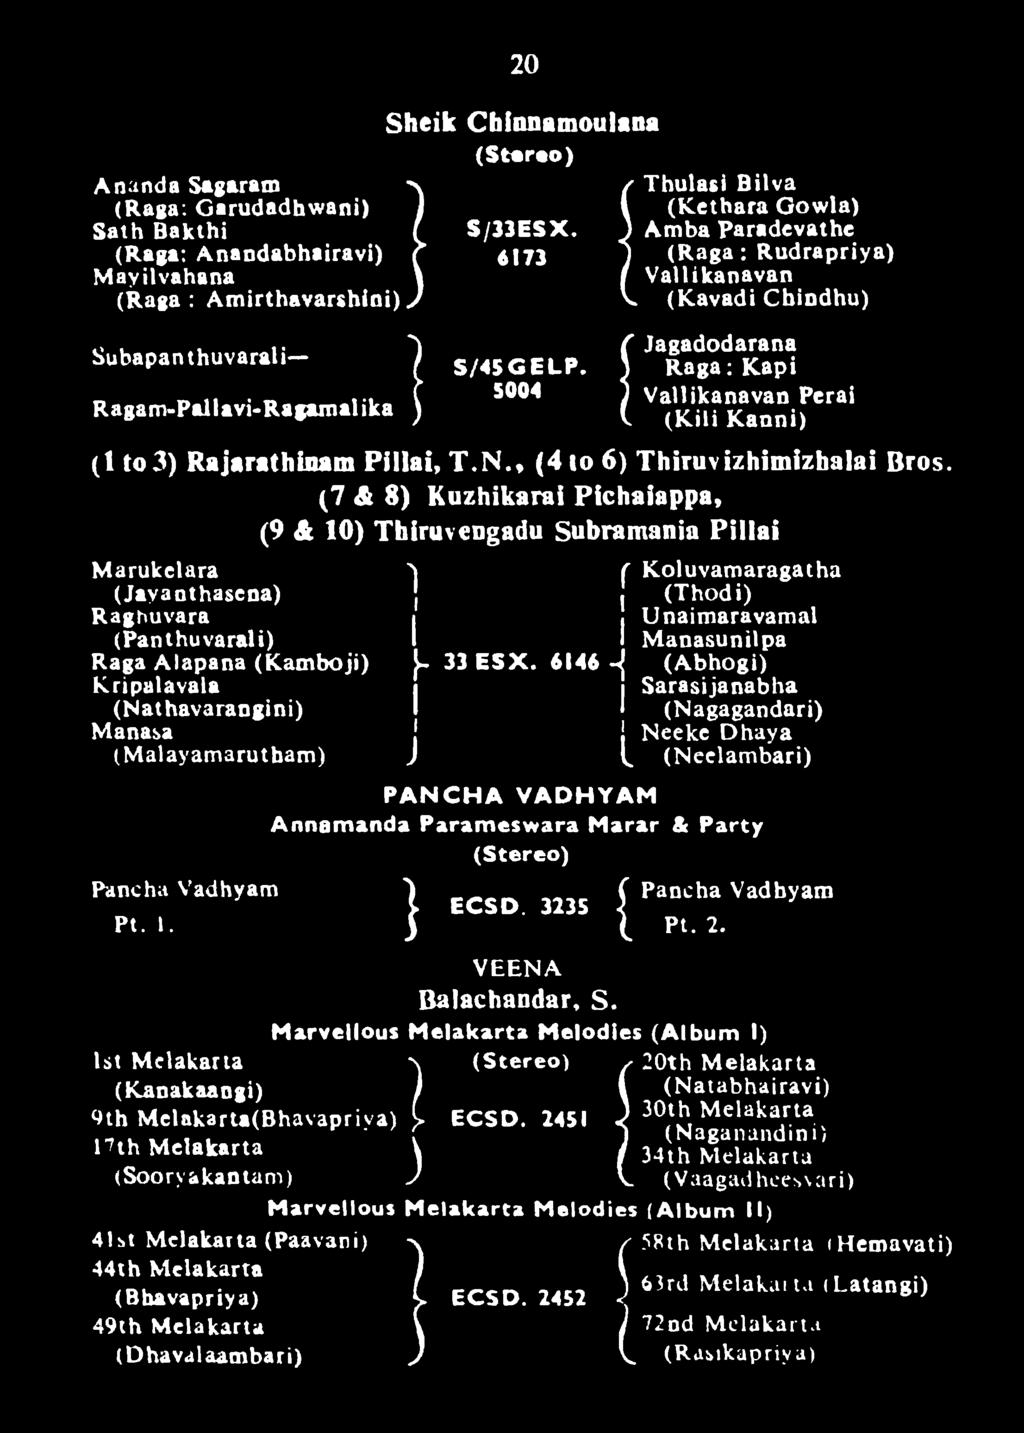 S004 Jagadodarana Raga: Kapi Vallikanavan Perai (Kili Kanni) (1 to3) Rajarathinam Plllai, T.N., (4 to 6) Thiruvizhimizhalai Bros.